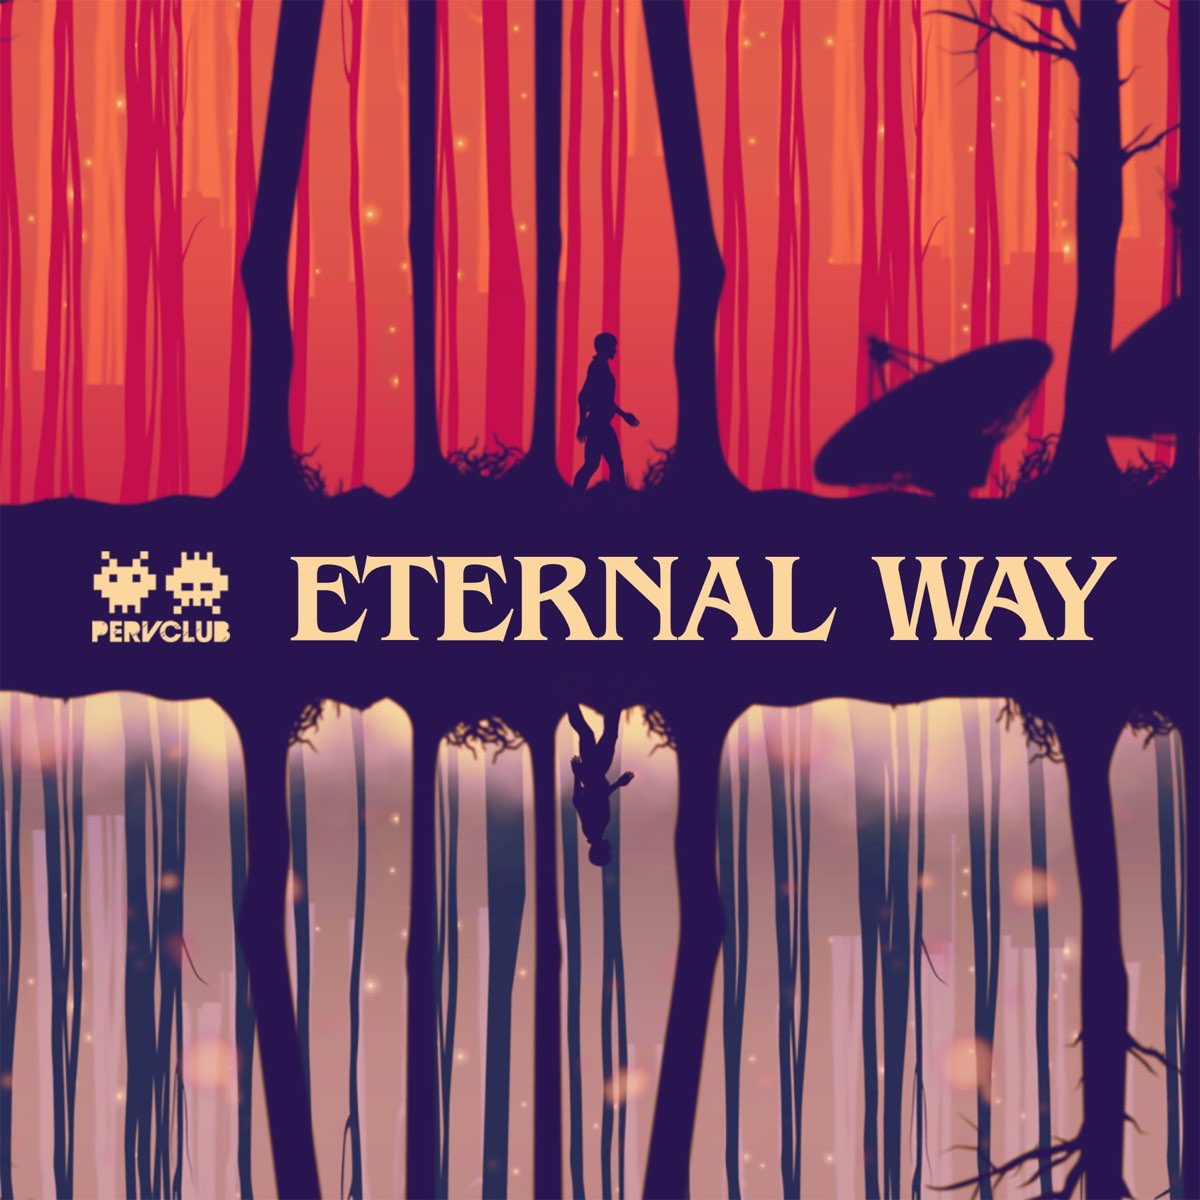 Eternal eternal album. Eternity песня. A way to Eternity. Eternal way ICESTORM. On the way to Eternity.